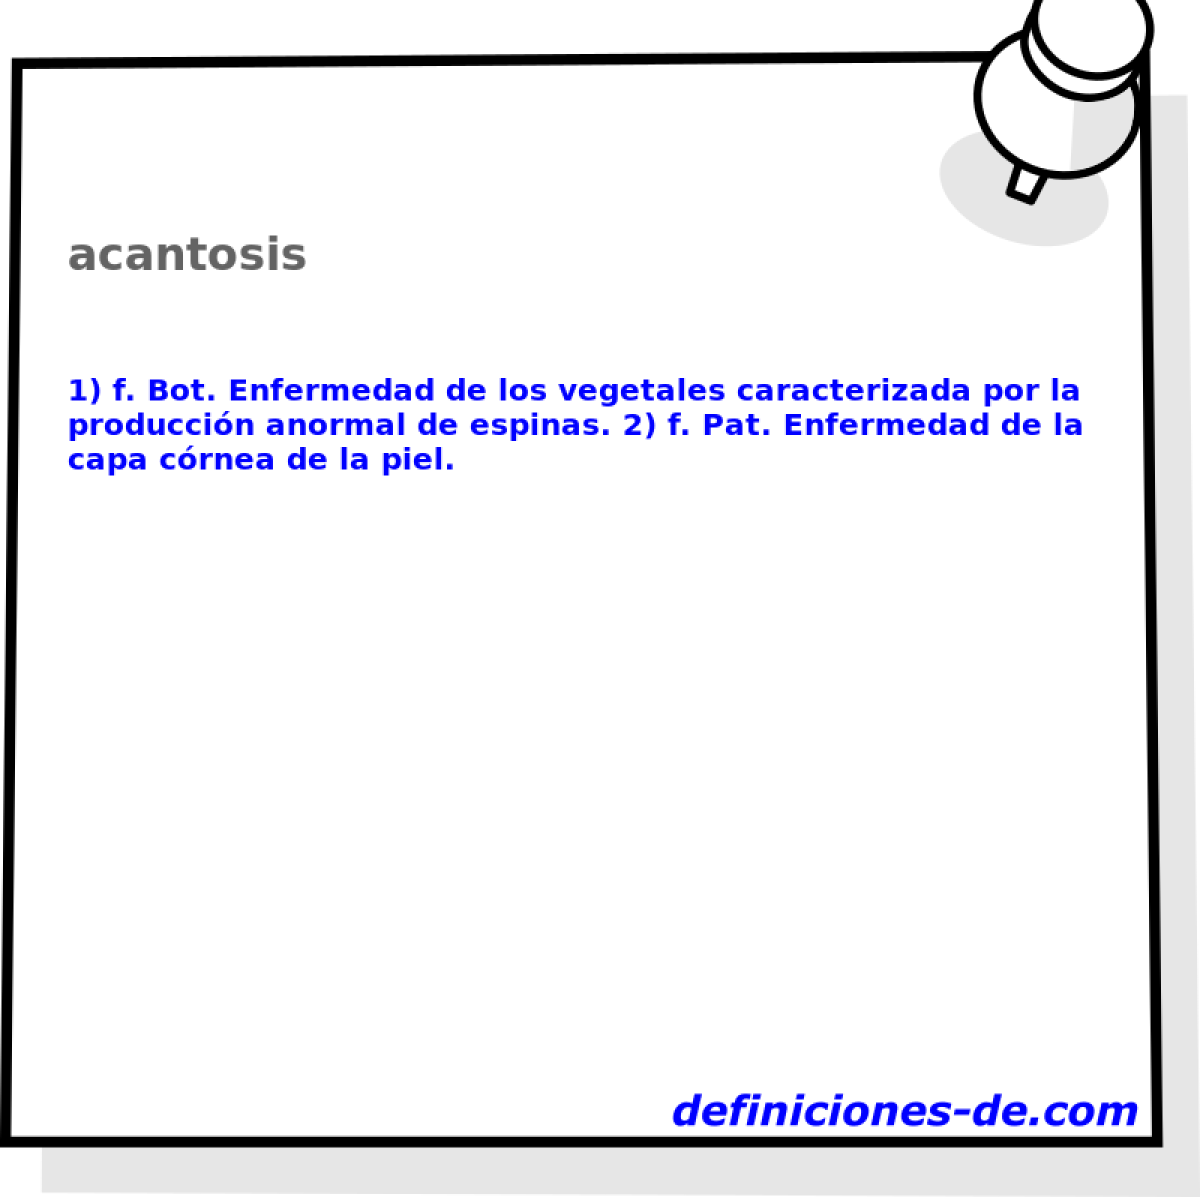 acantosis 